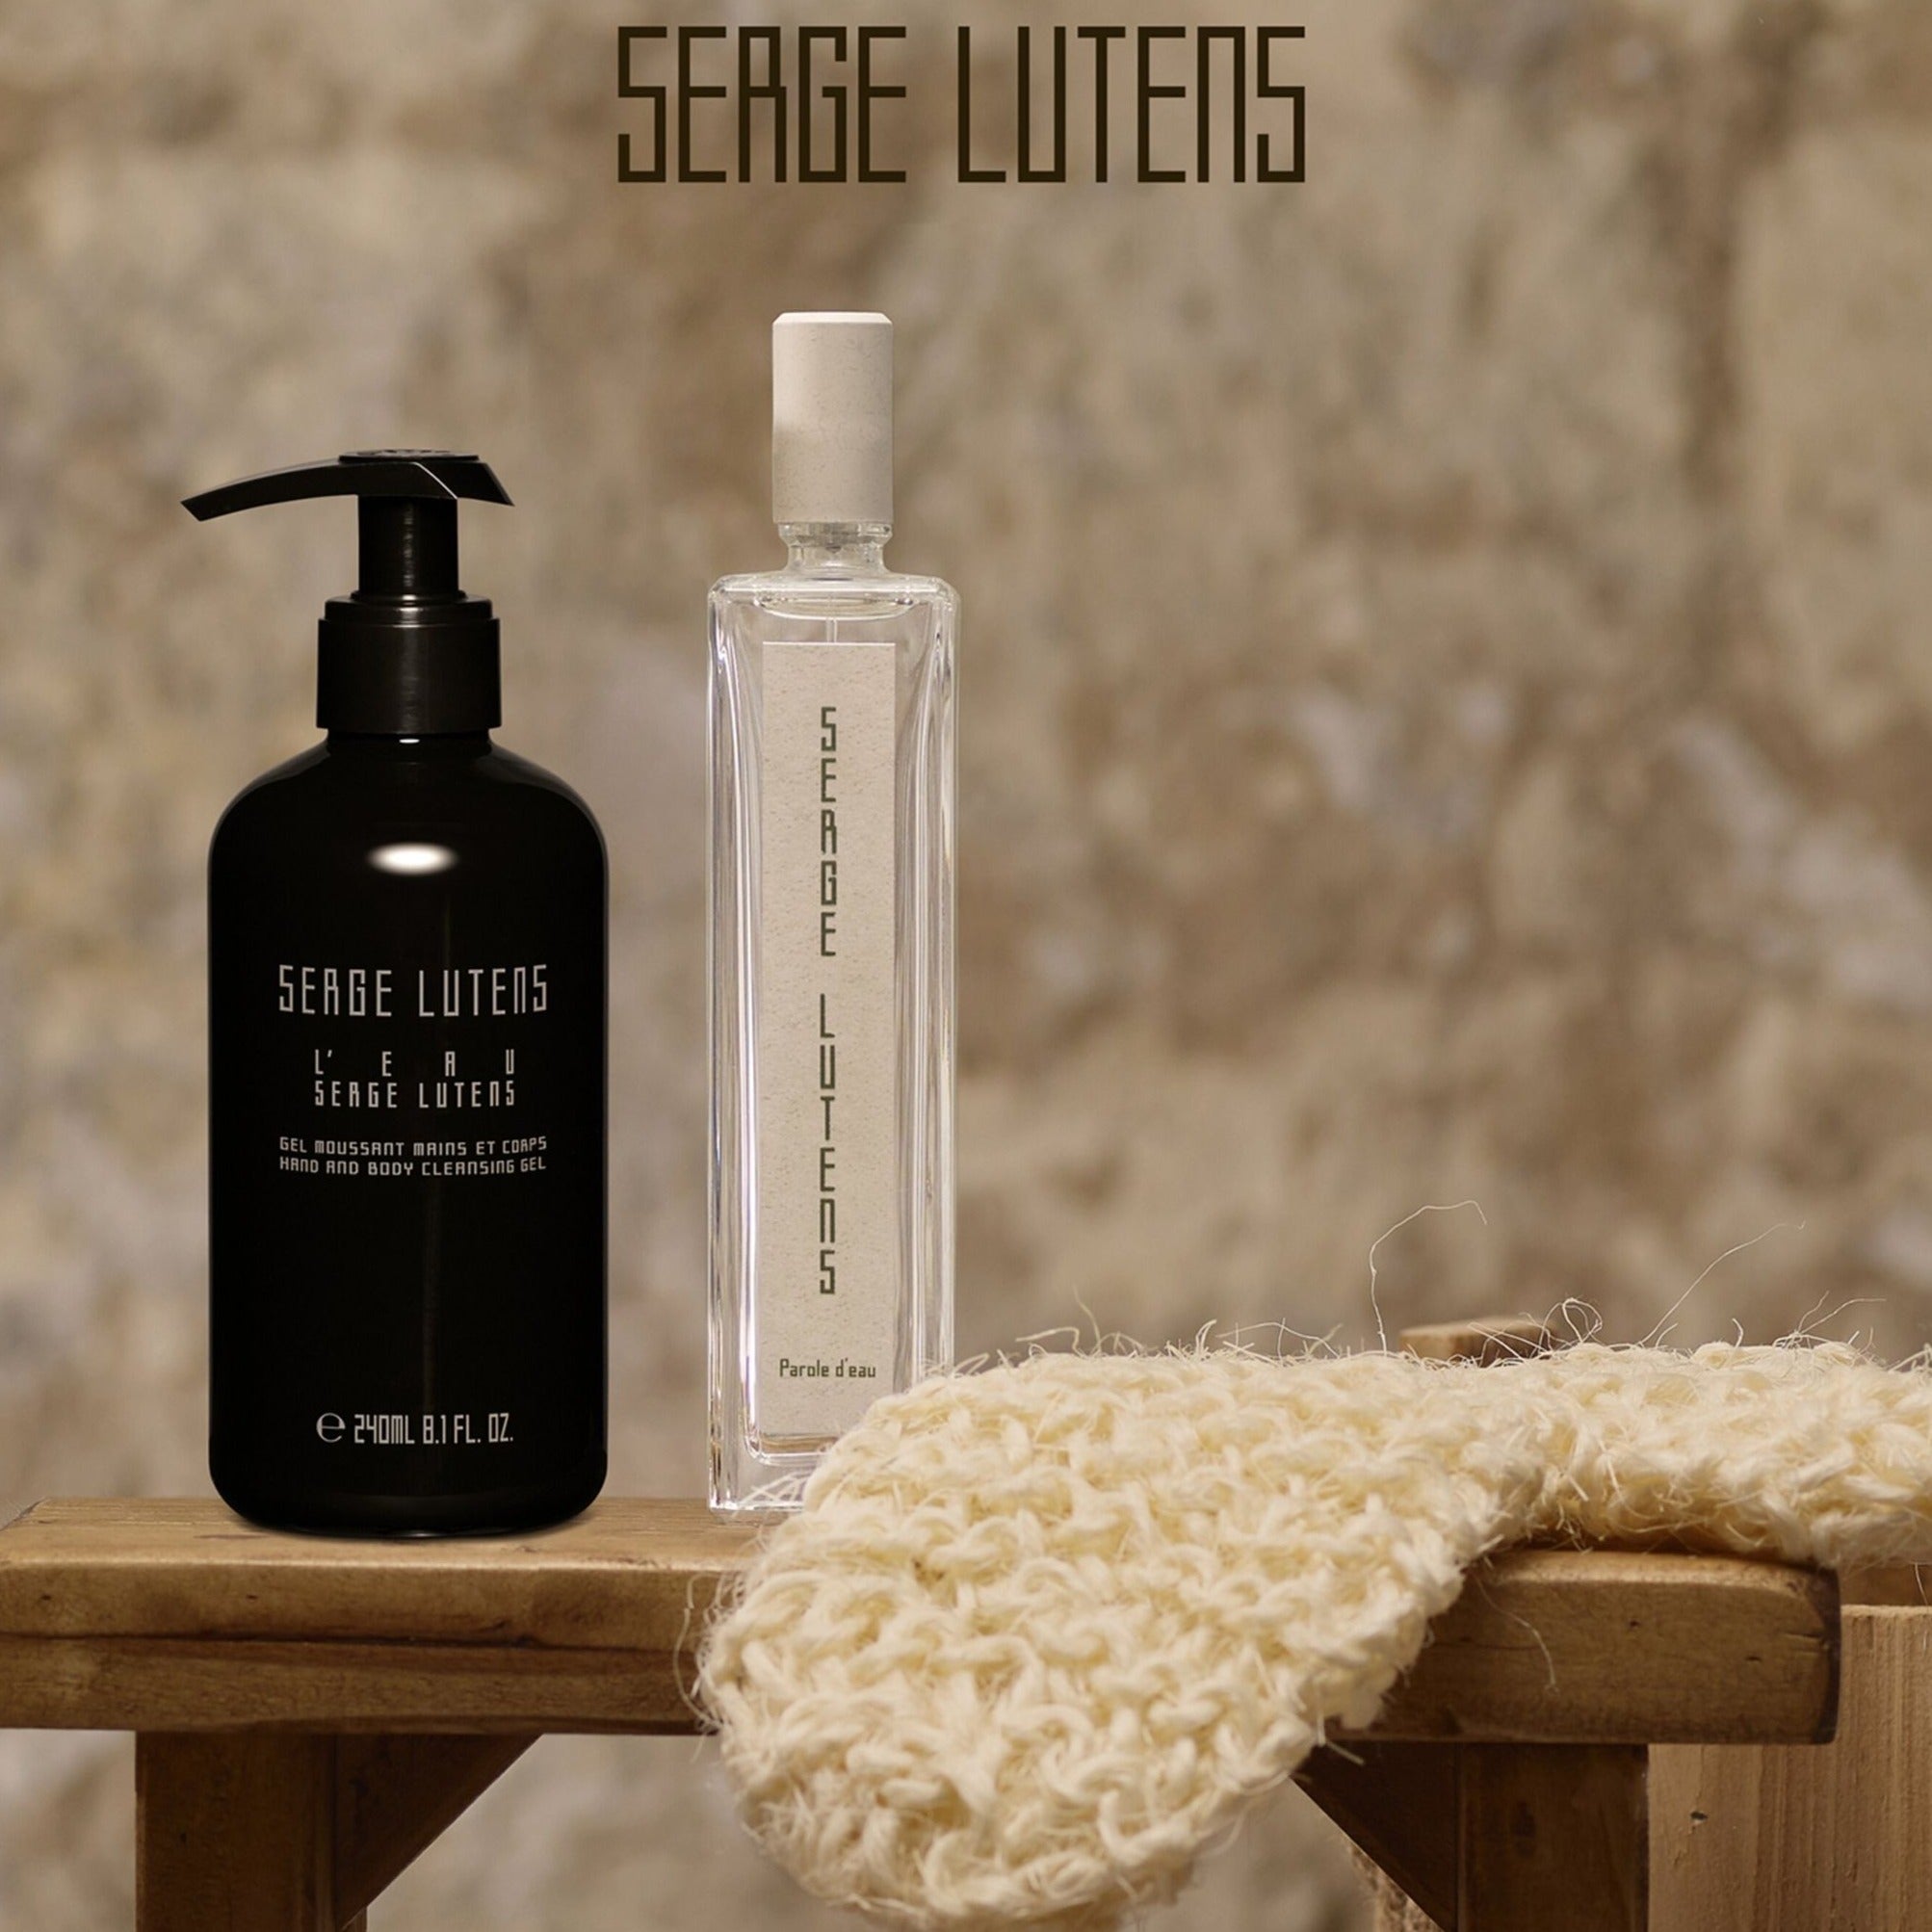 Serge Lutens L'Eau Serge Lutens Hand And Body Cleansing Gel | My Perfume Shop Australia